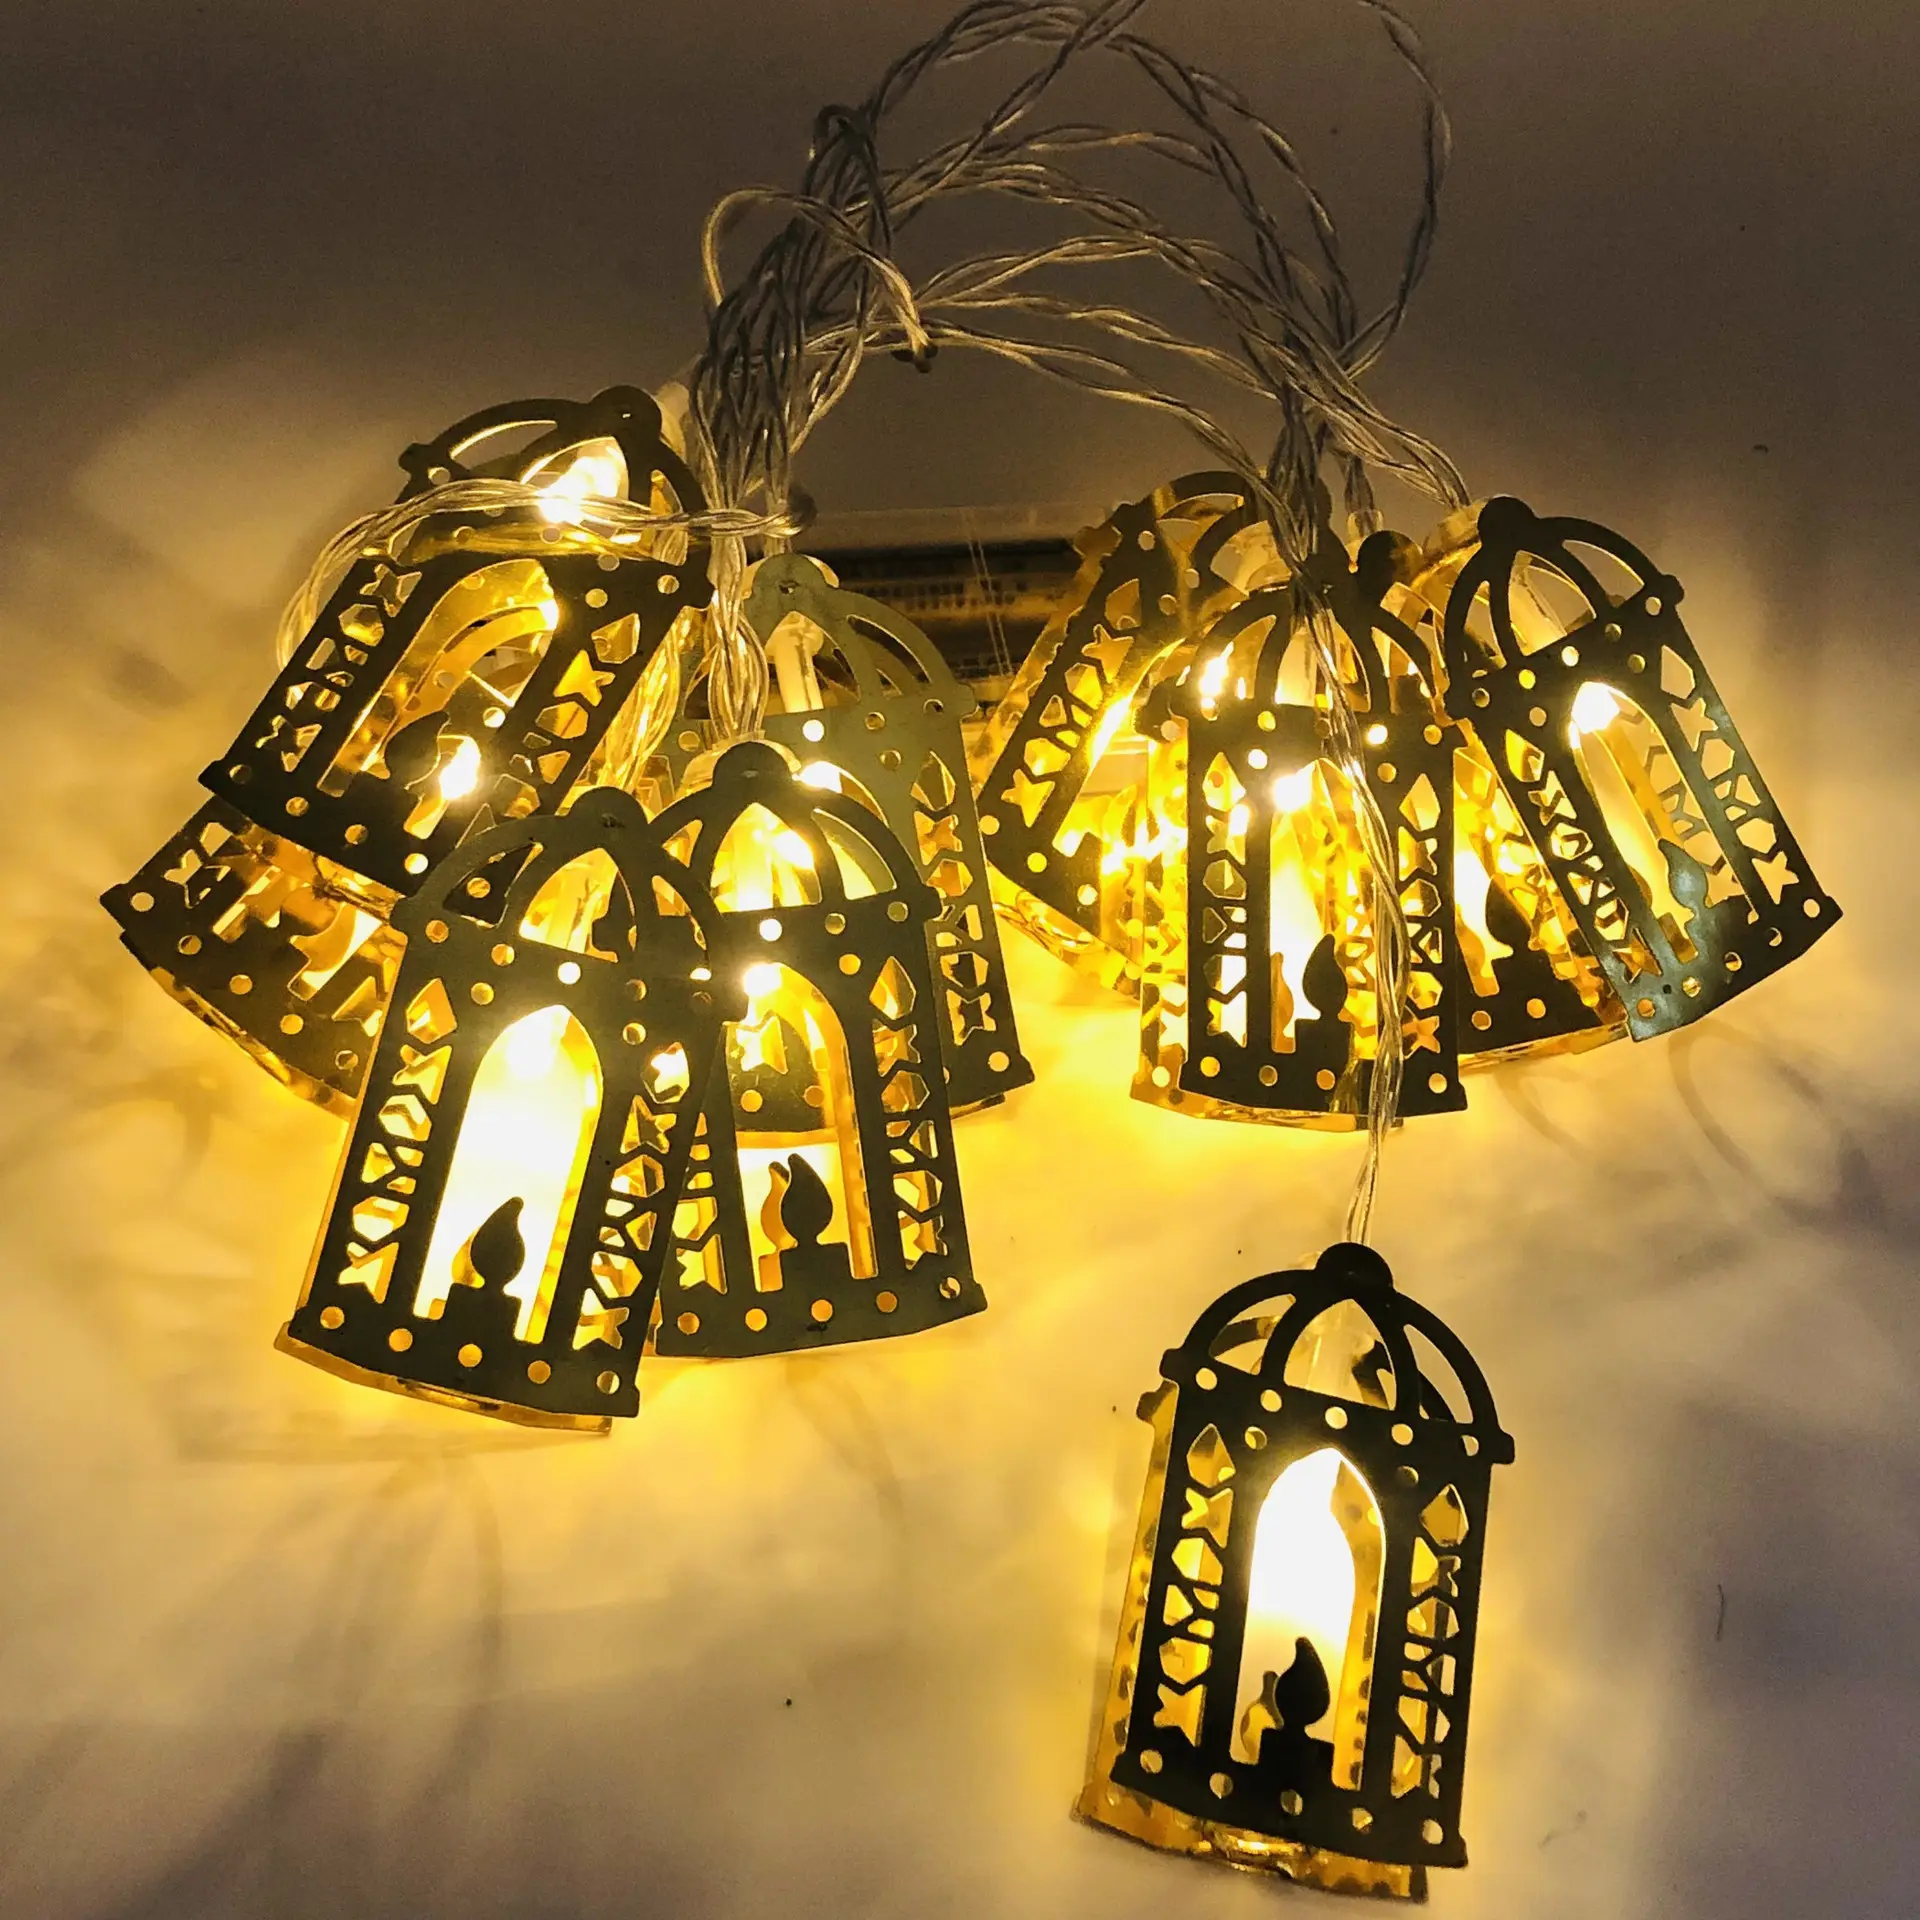 Cadena de luces de estrella hueca árabe musulmana decoración de luz LED musulmana Eid Mubarak para suministros islámicos de Ramadán